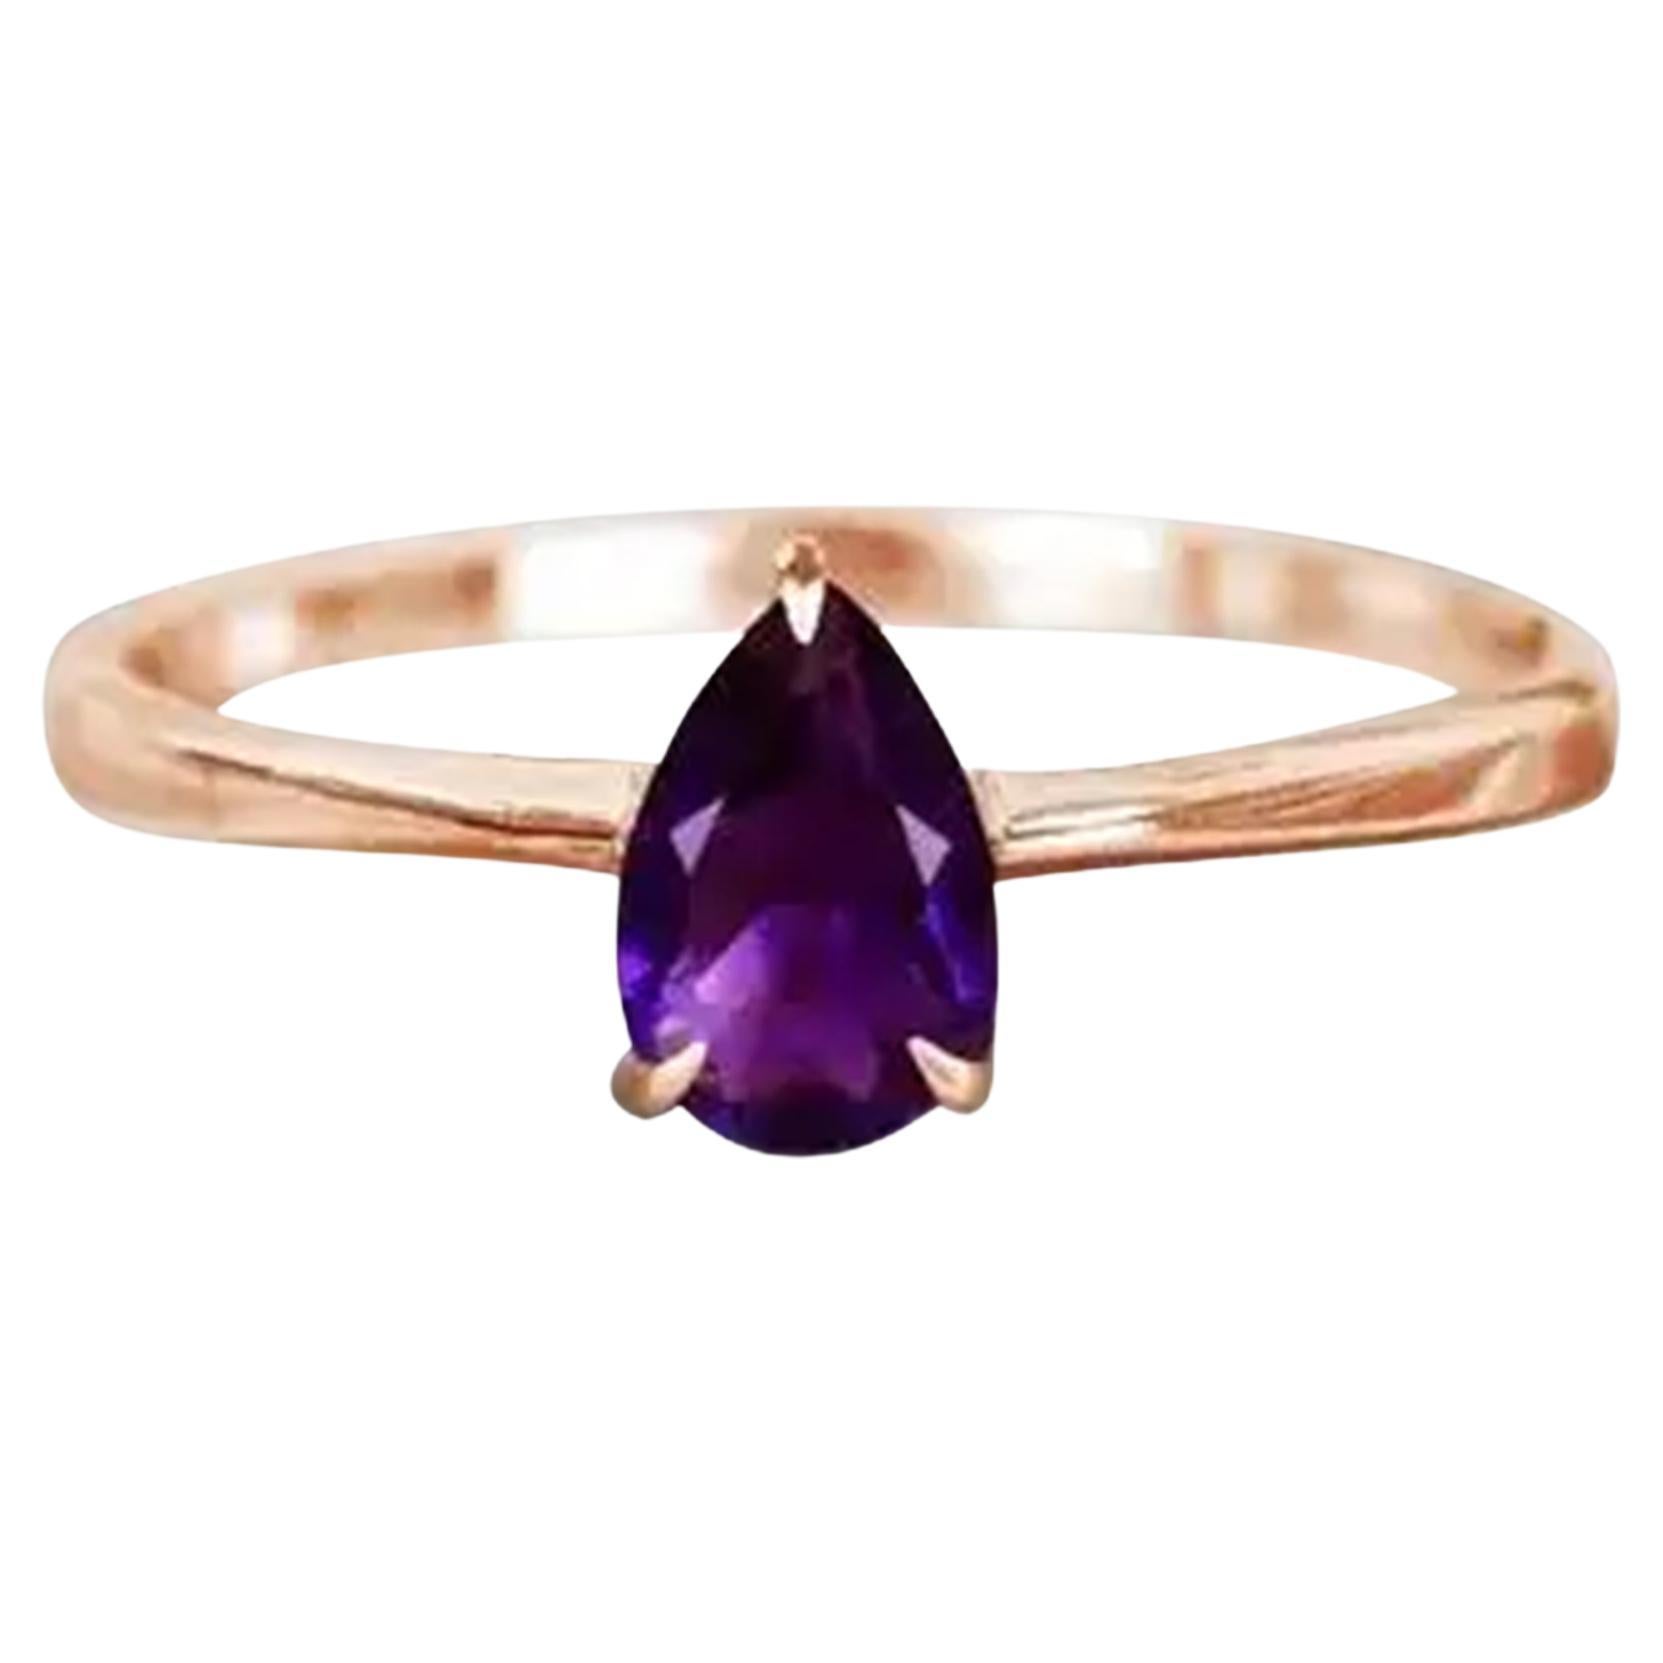 For Sale:  14k Gold Pear Gemstone 7x5 mm Pear Gemstone Ring Birthstone Ring Engagement Ring